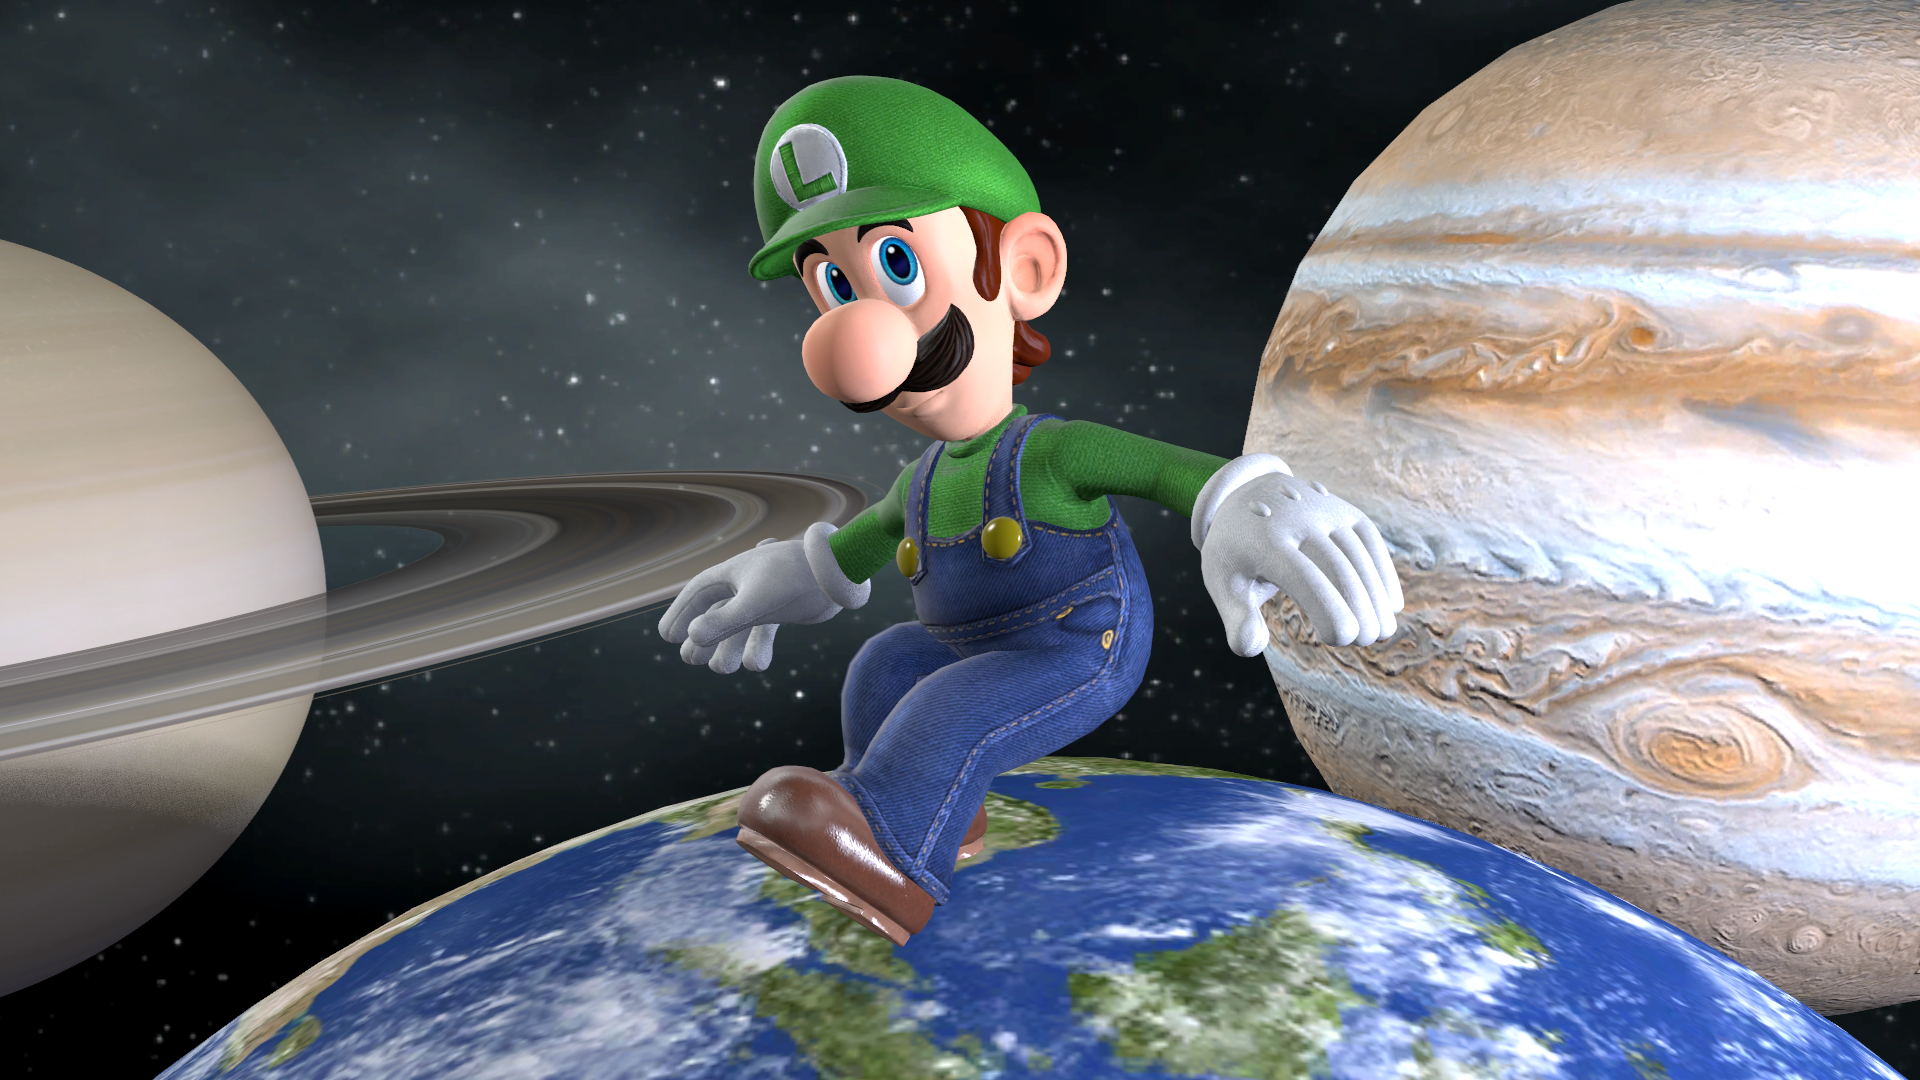 You can now play as Luigi. - Super Mario Galaxy by Rubychu96 on DeviantArt